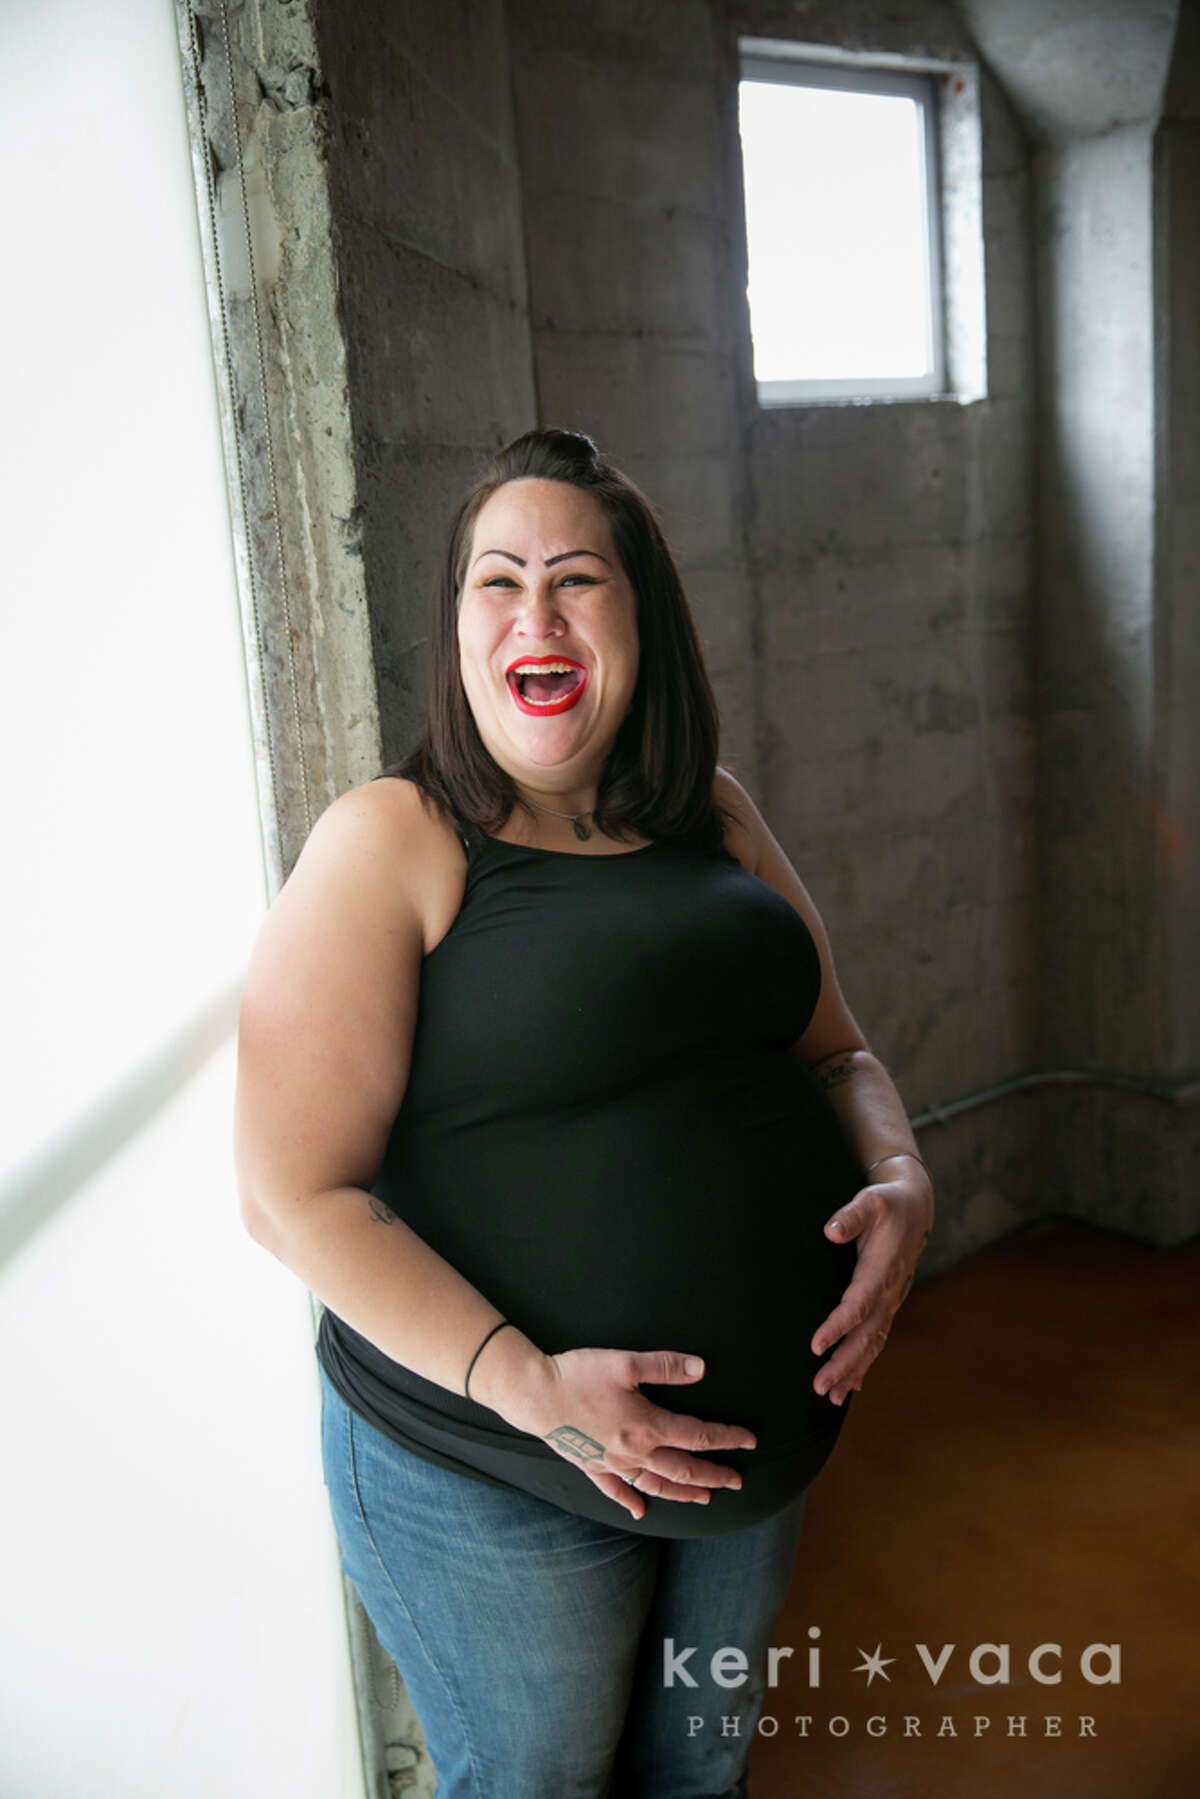 A maternity portrait taken by photographer Keri Vaca at San Francisco's Homeless Prenatal Program